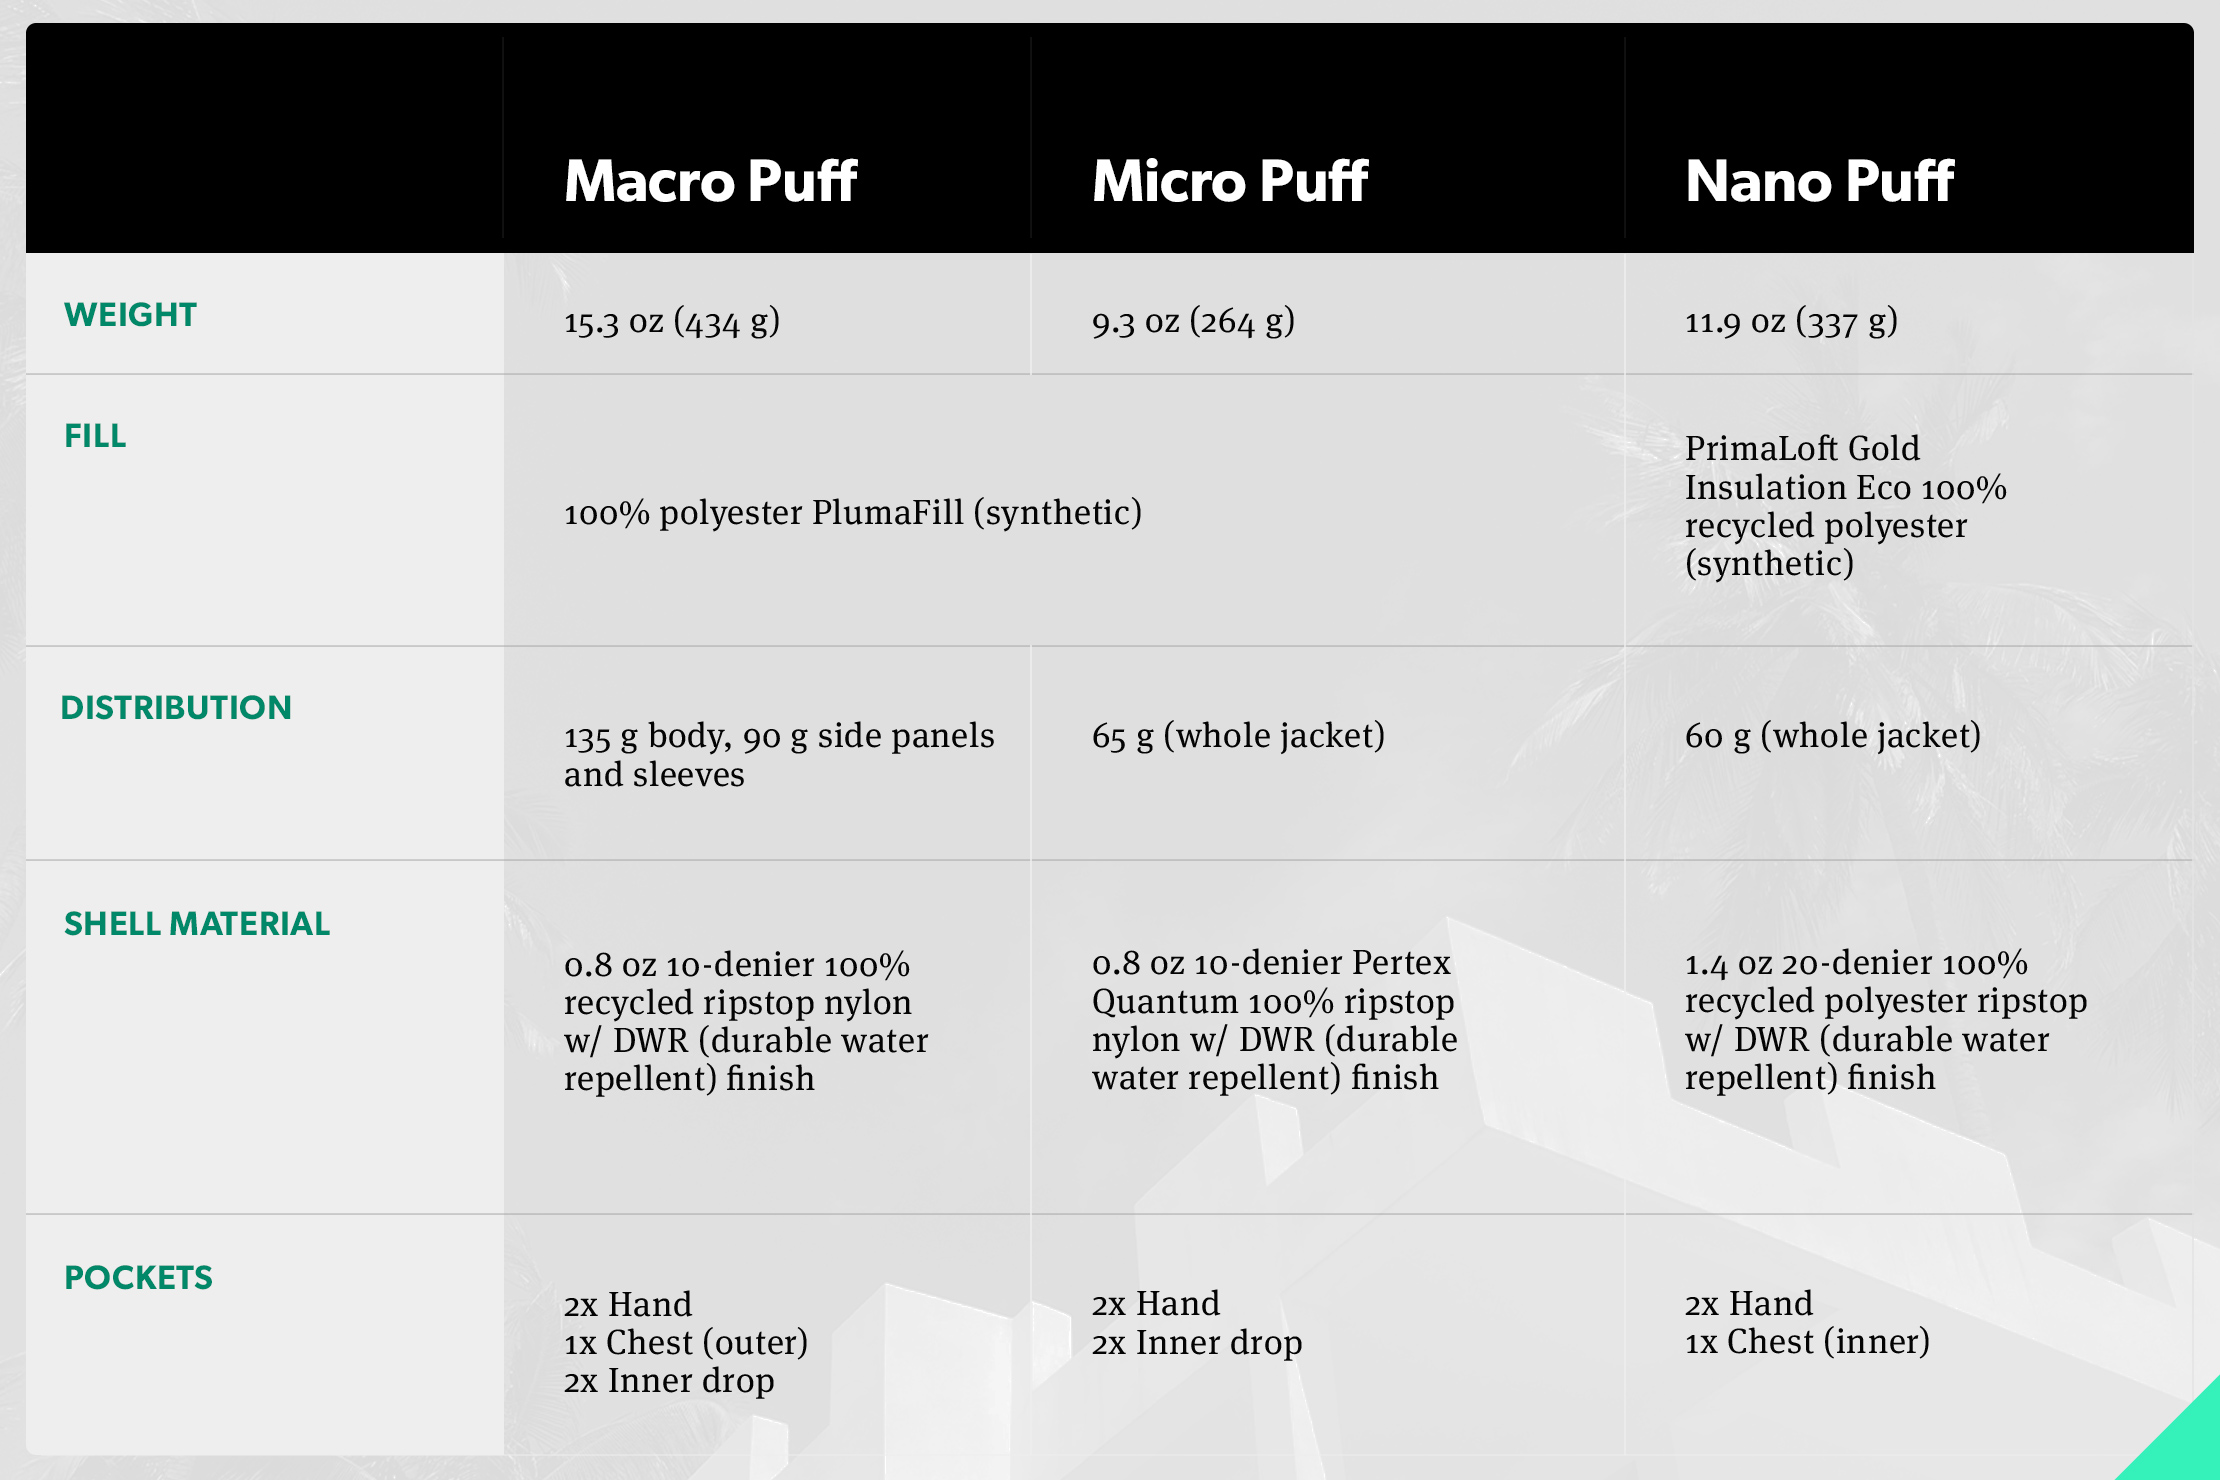 Patagonia Nano Puff vs. Macro Puff vs. Micro Puff